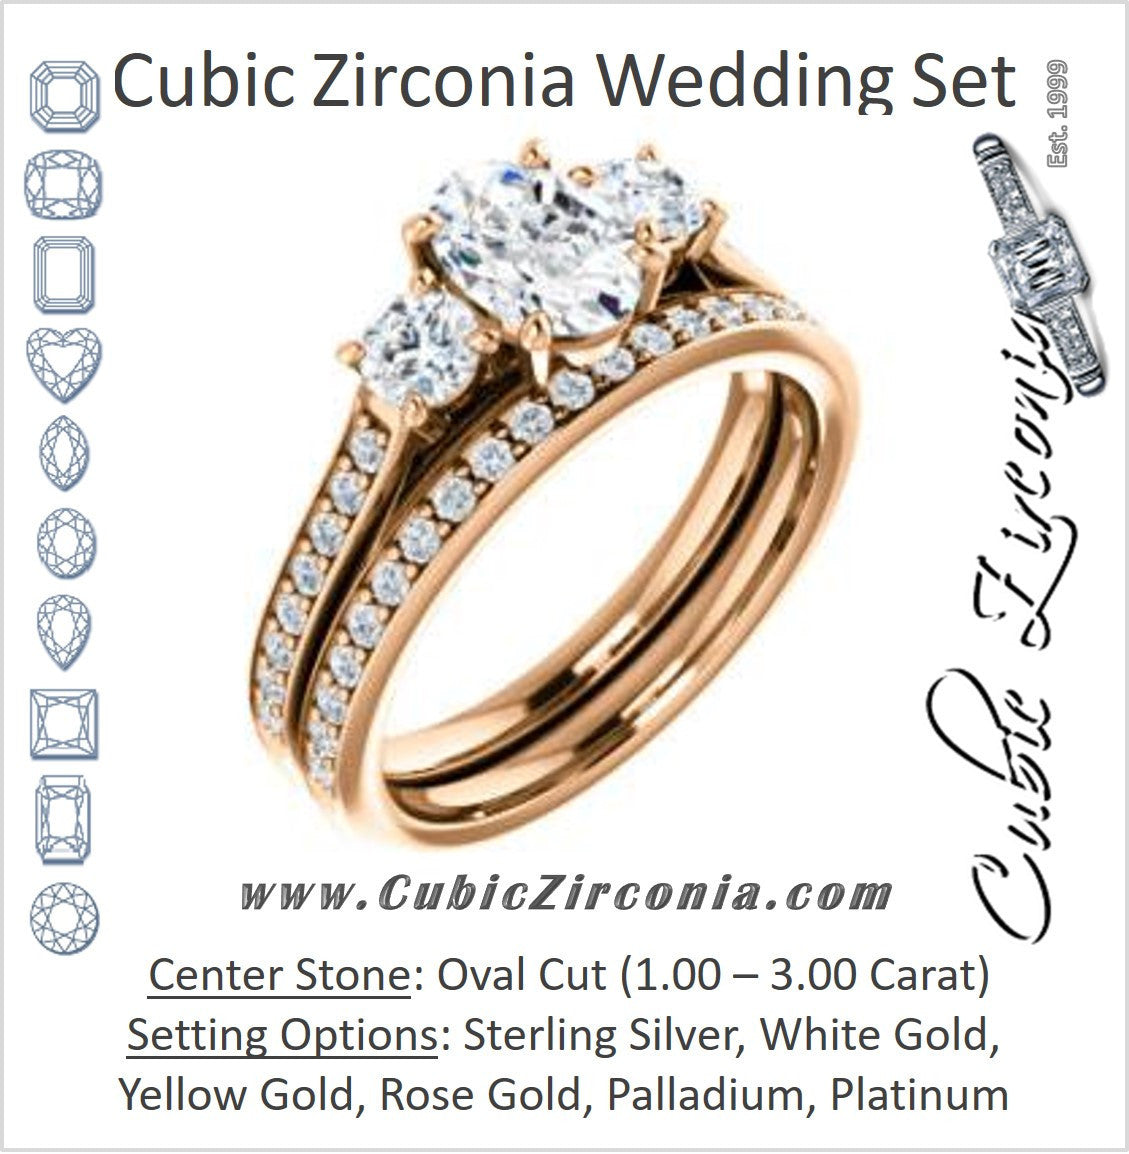 CZ Wedding Set, featuring The Tess engagement ring (Customizable Oval Cut Trellis-Enhanced Bridge Setting with Semi-Pavé Band)